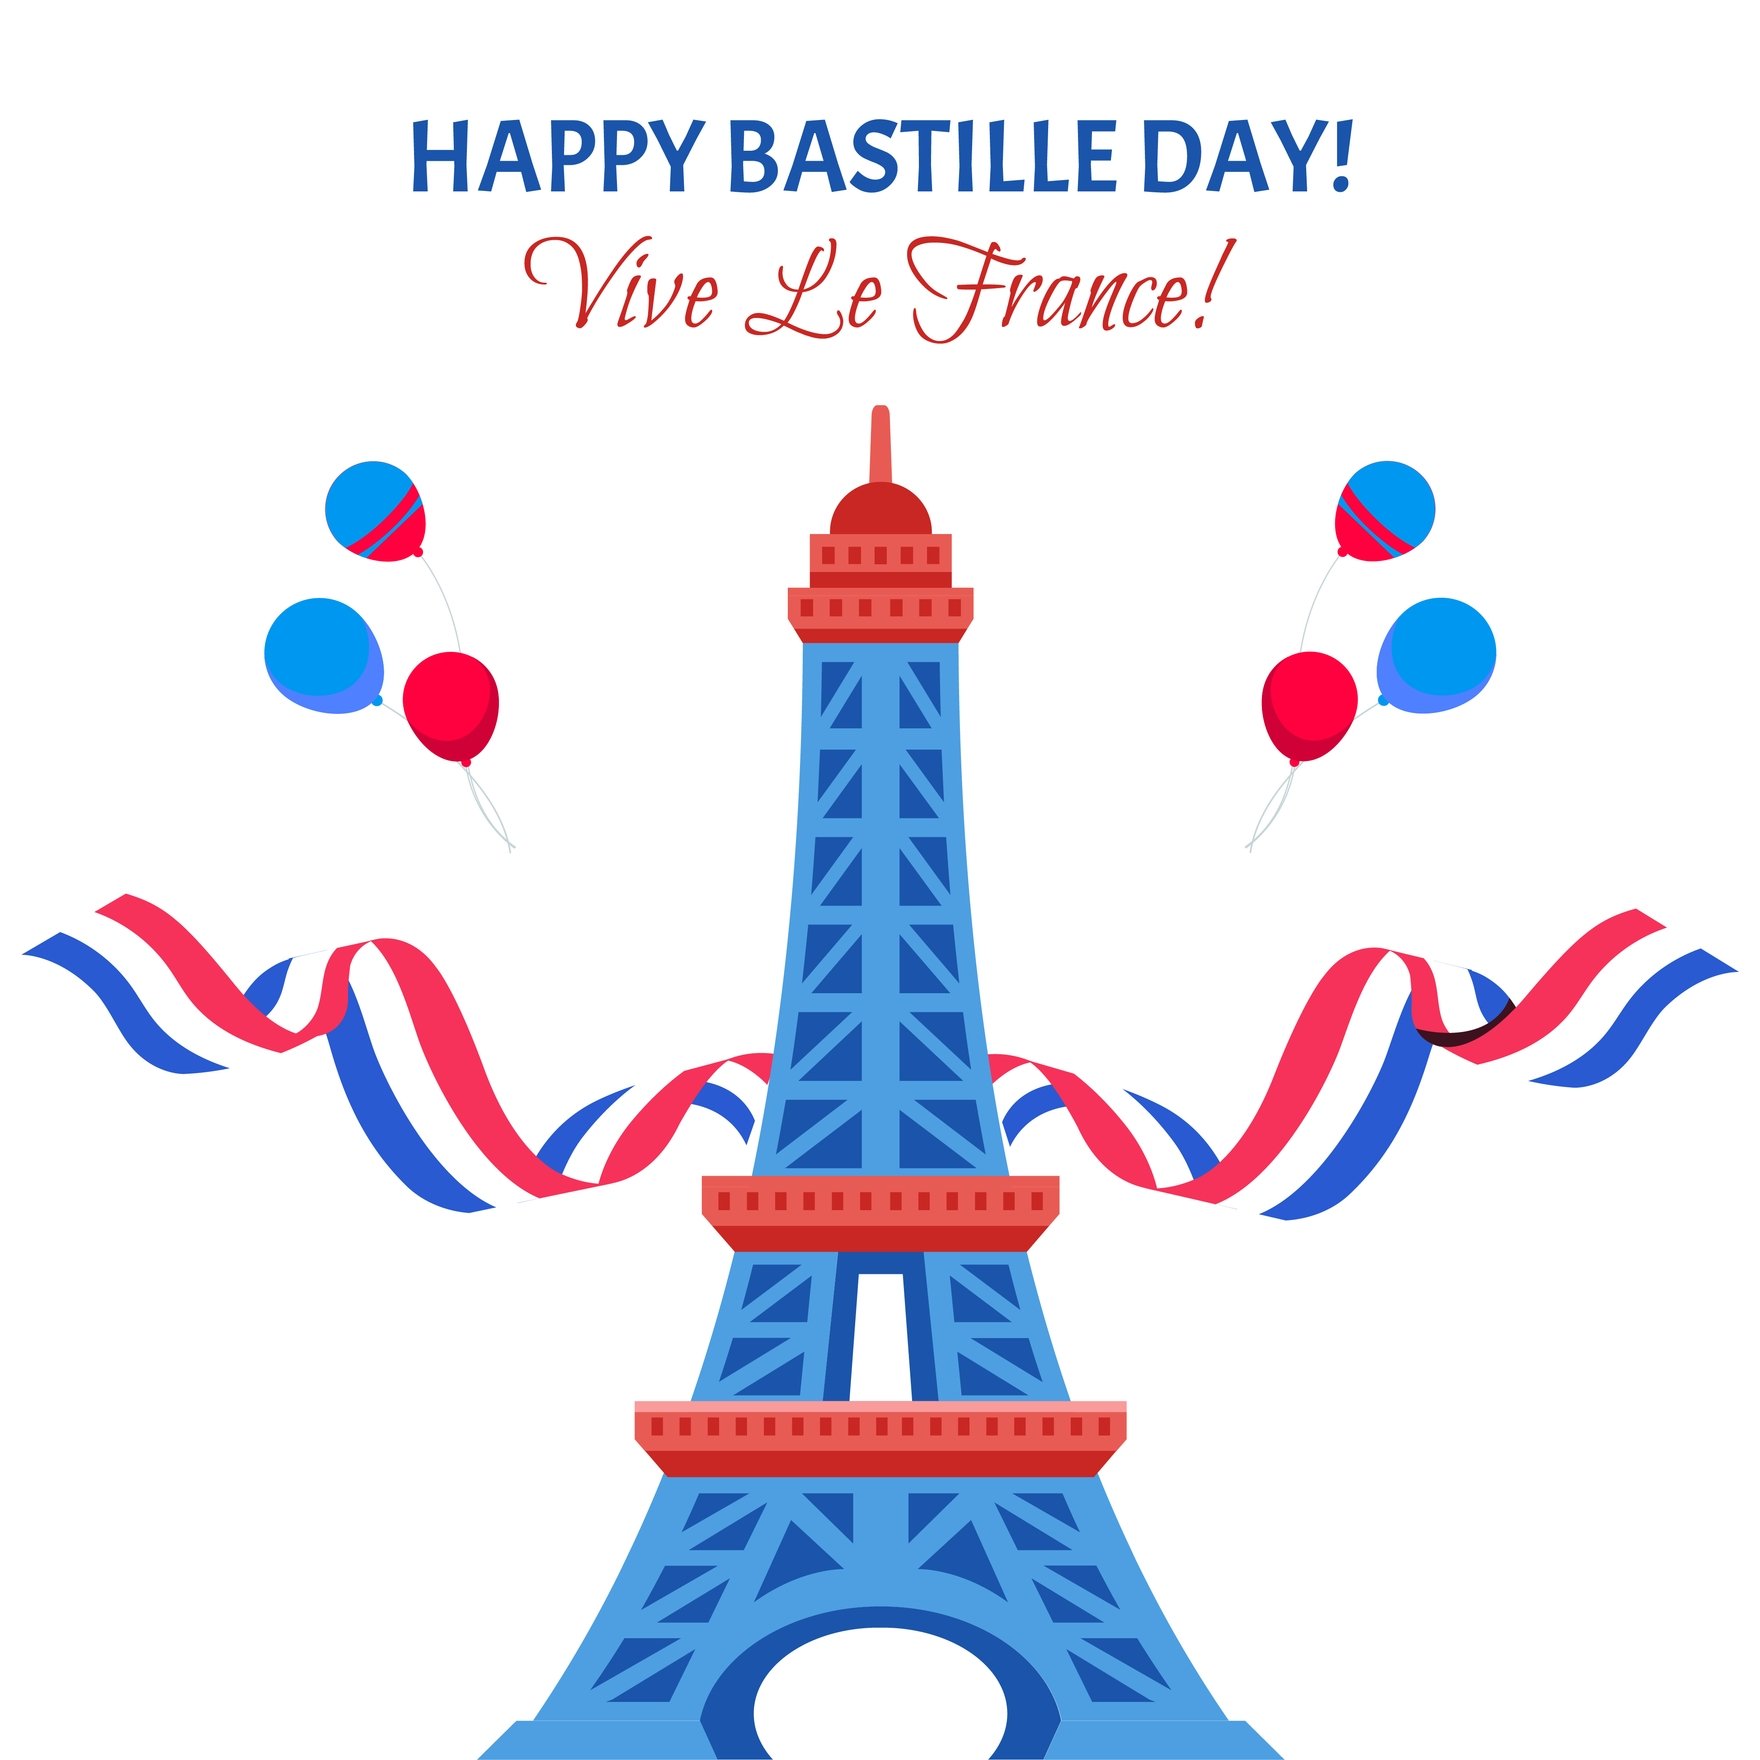 Bastille Day Quote Vector in Illustrator, PSD, EPS, SVG, JPG, PNG